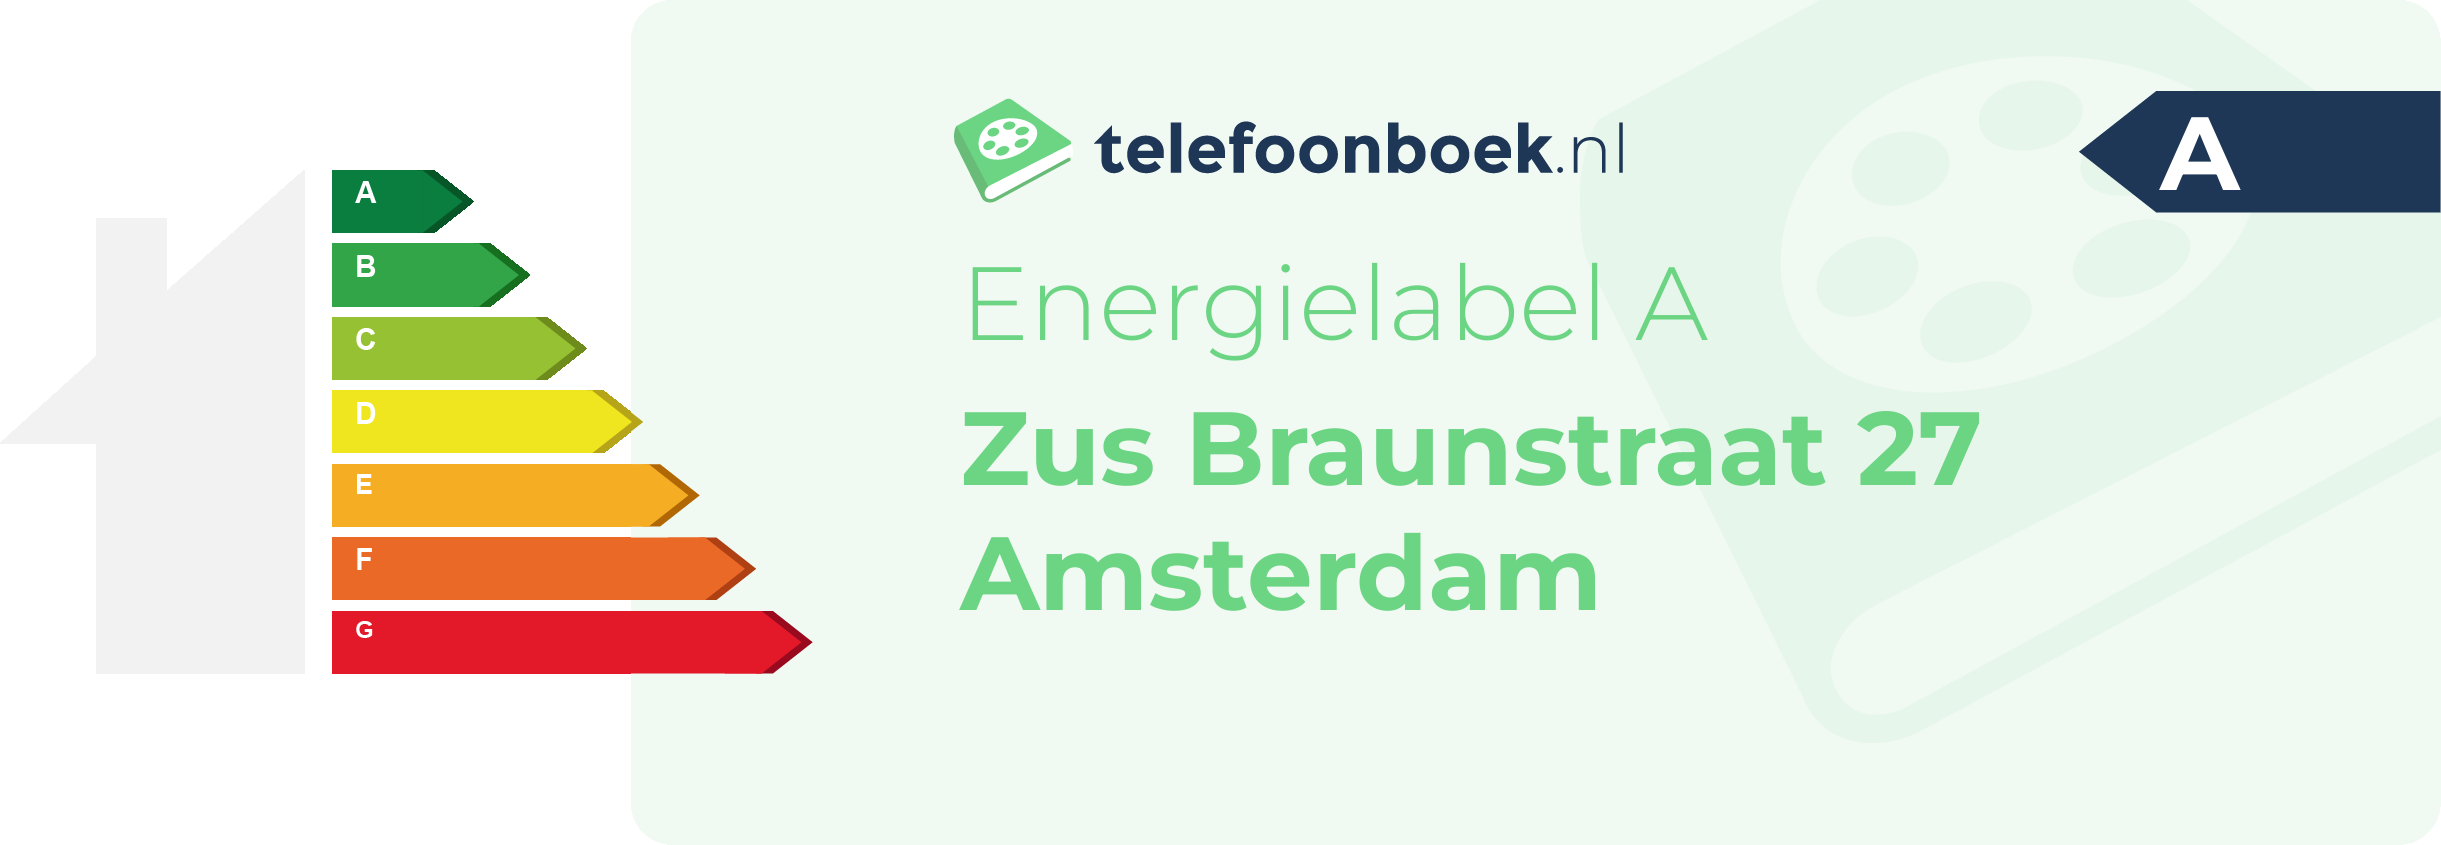 Energielabel Zus Braunstraat 27 Amsterdam